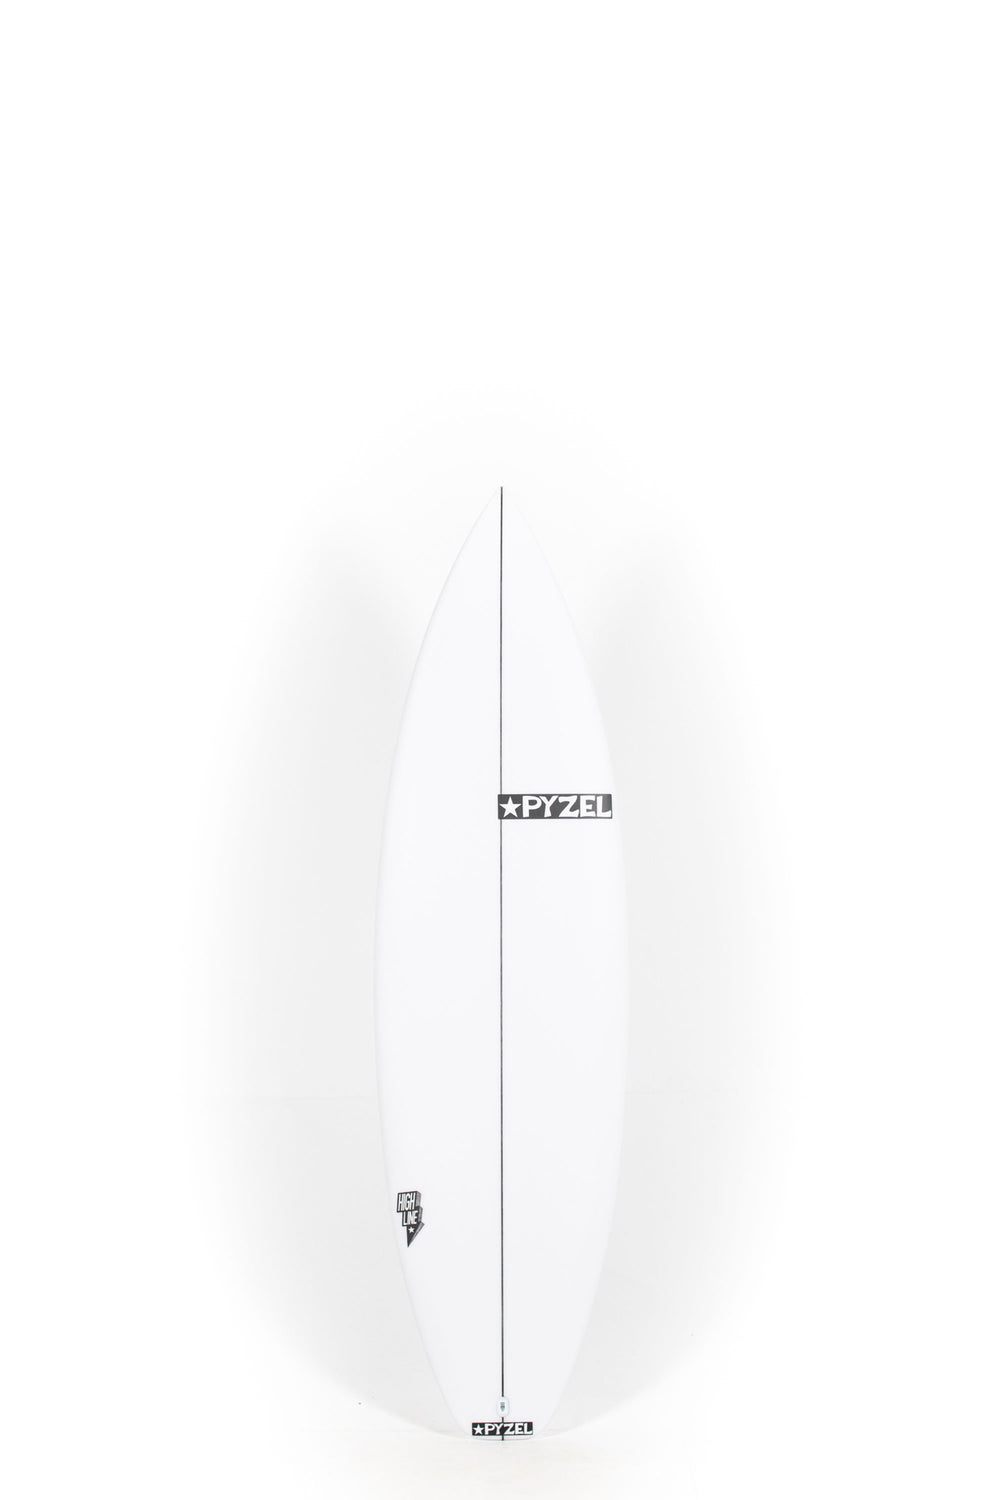 Pukas Surf Shop - Pyzel Surfboards - HIGH LINE - 5'11